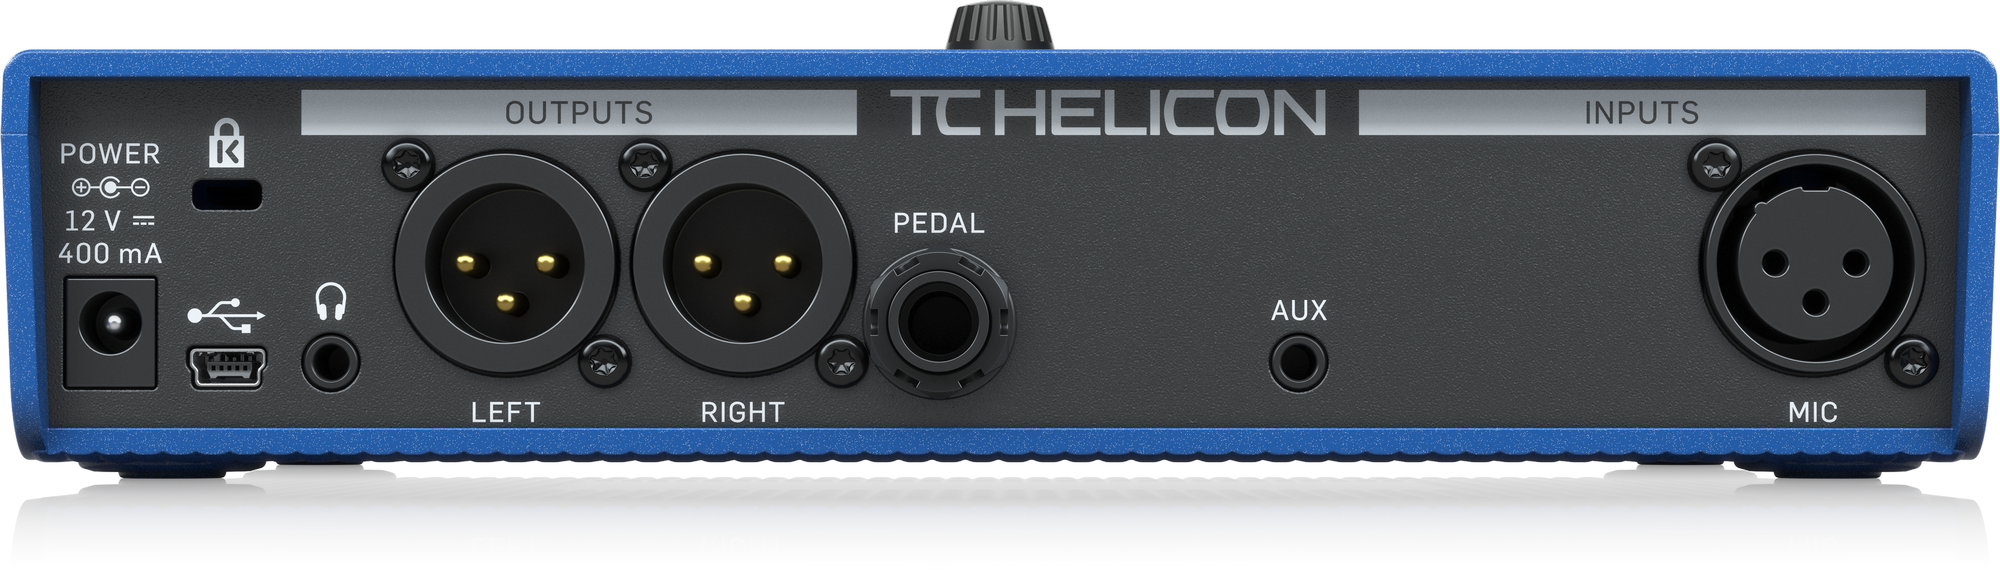 Pédale TC Helicon VoiceLive Play Harmony and Effects pour chanteurs 